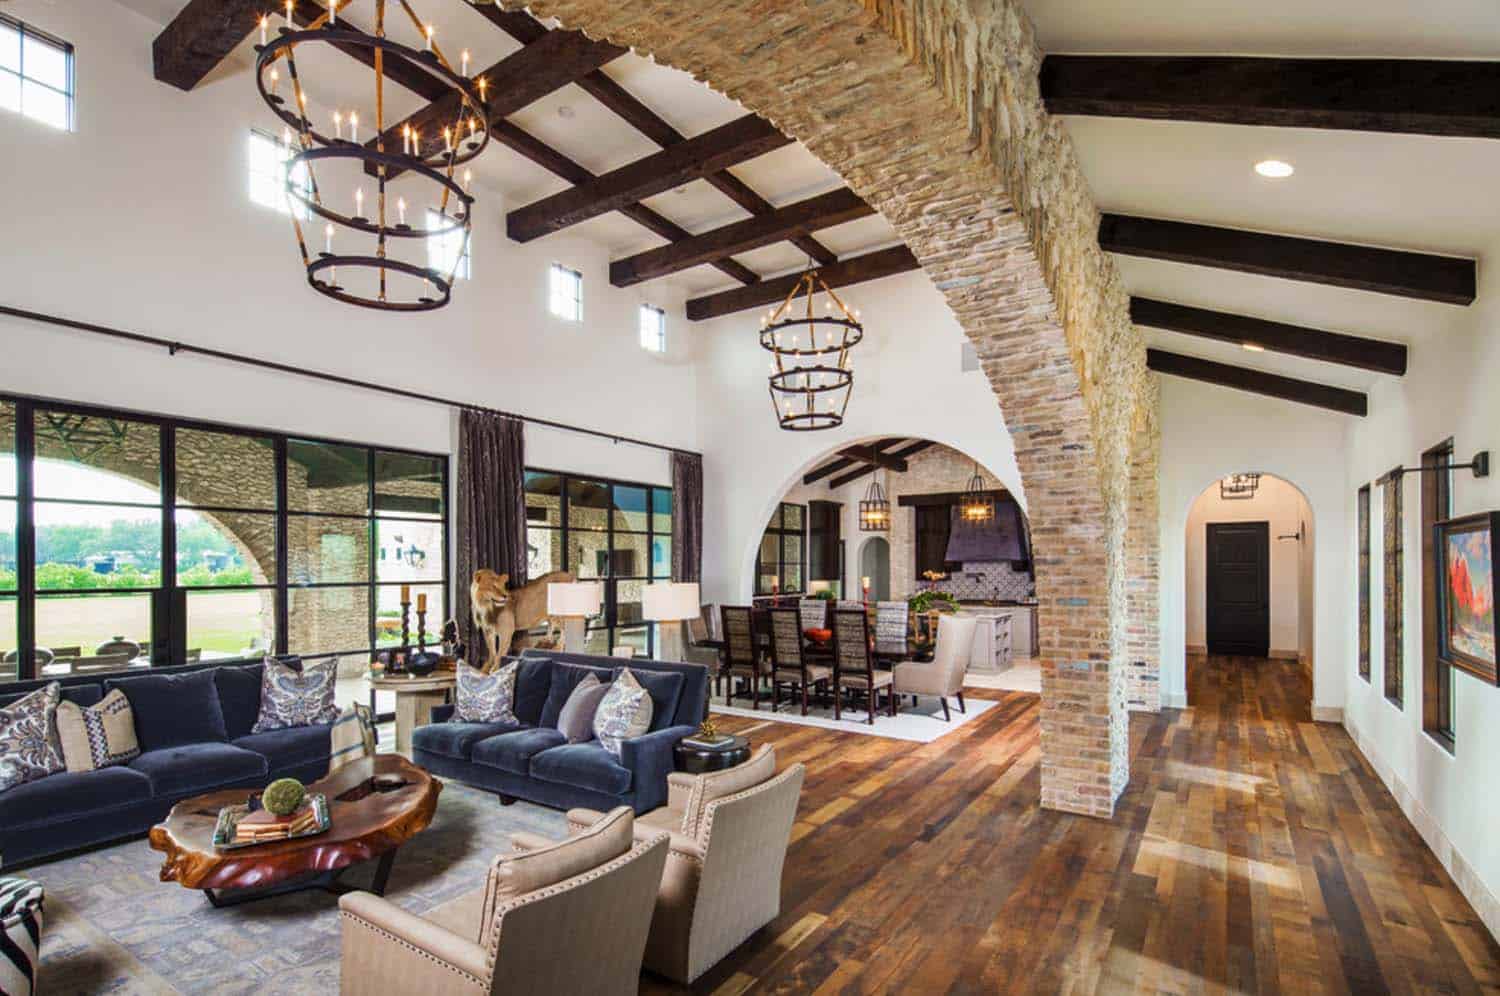 Home Tour: Mediterranean style villa boasting stylish interiors in Texas